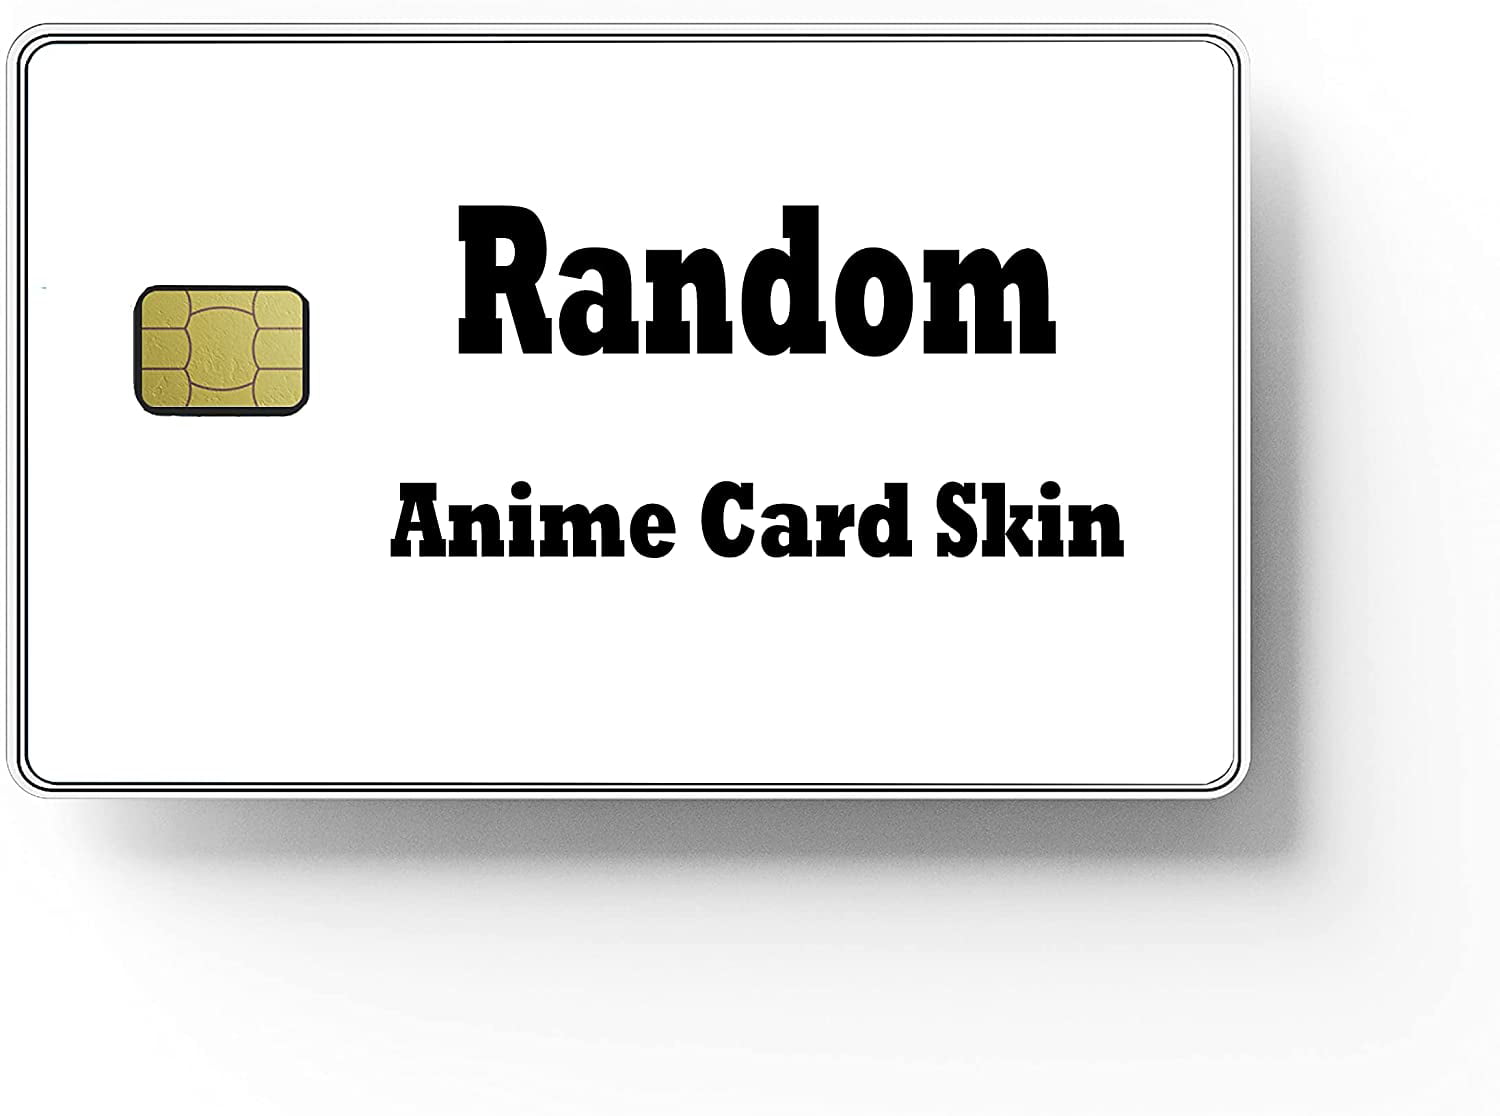 Amazoncom WeebNation Satoru Gojo  Jujutsu Kaisen  4pcs Anime Card  Sticker for Debit Credit Card Skin  Cover and Personalize Bank Card   Tearproof Waterproof Card Cover  HighestGrade Quality No